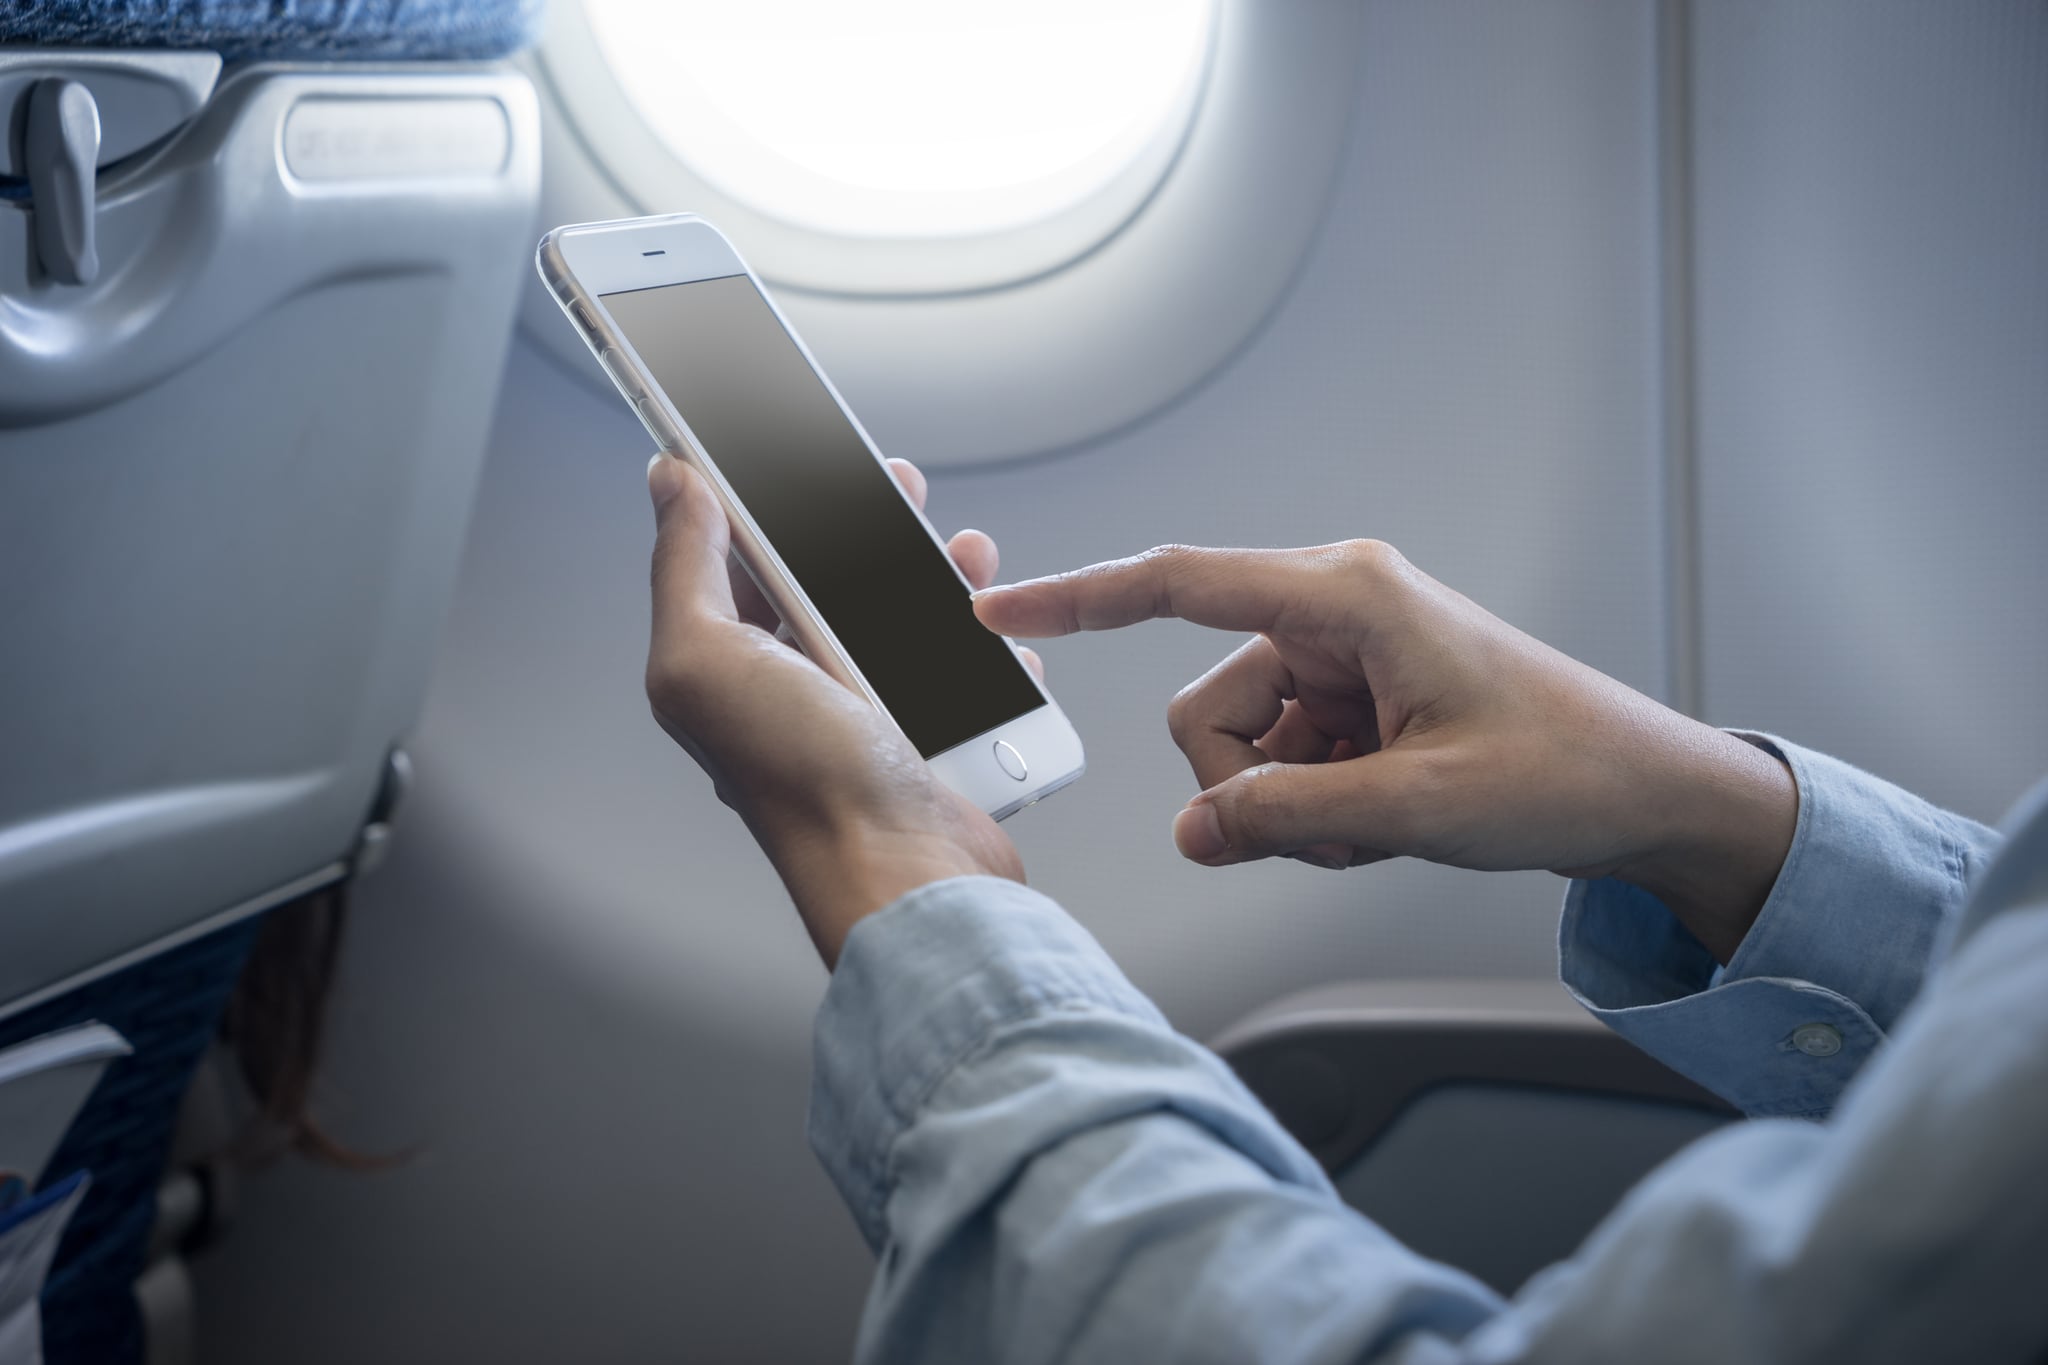 Телефон во время полета в самолете. Телефон в самолете. Человек с телефоном в самолете. Телефон в руке. Интернет на борту самолета.